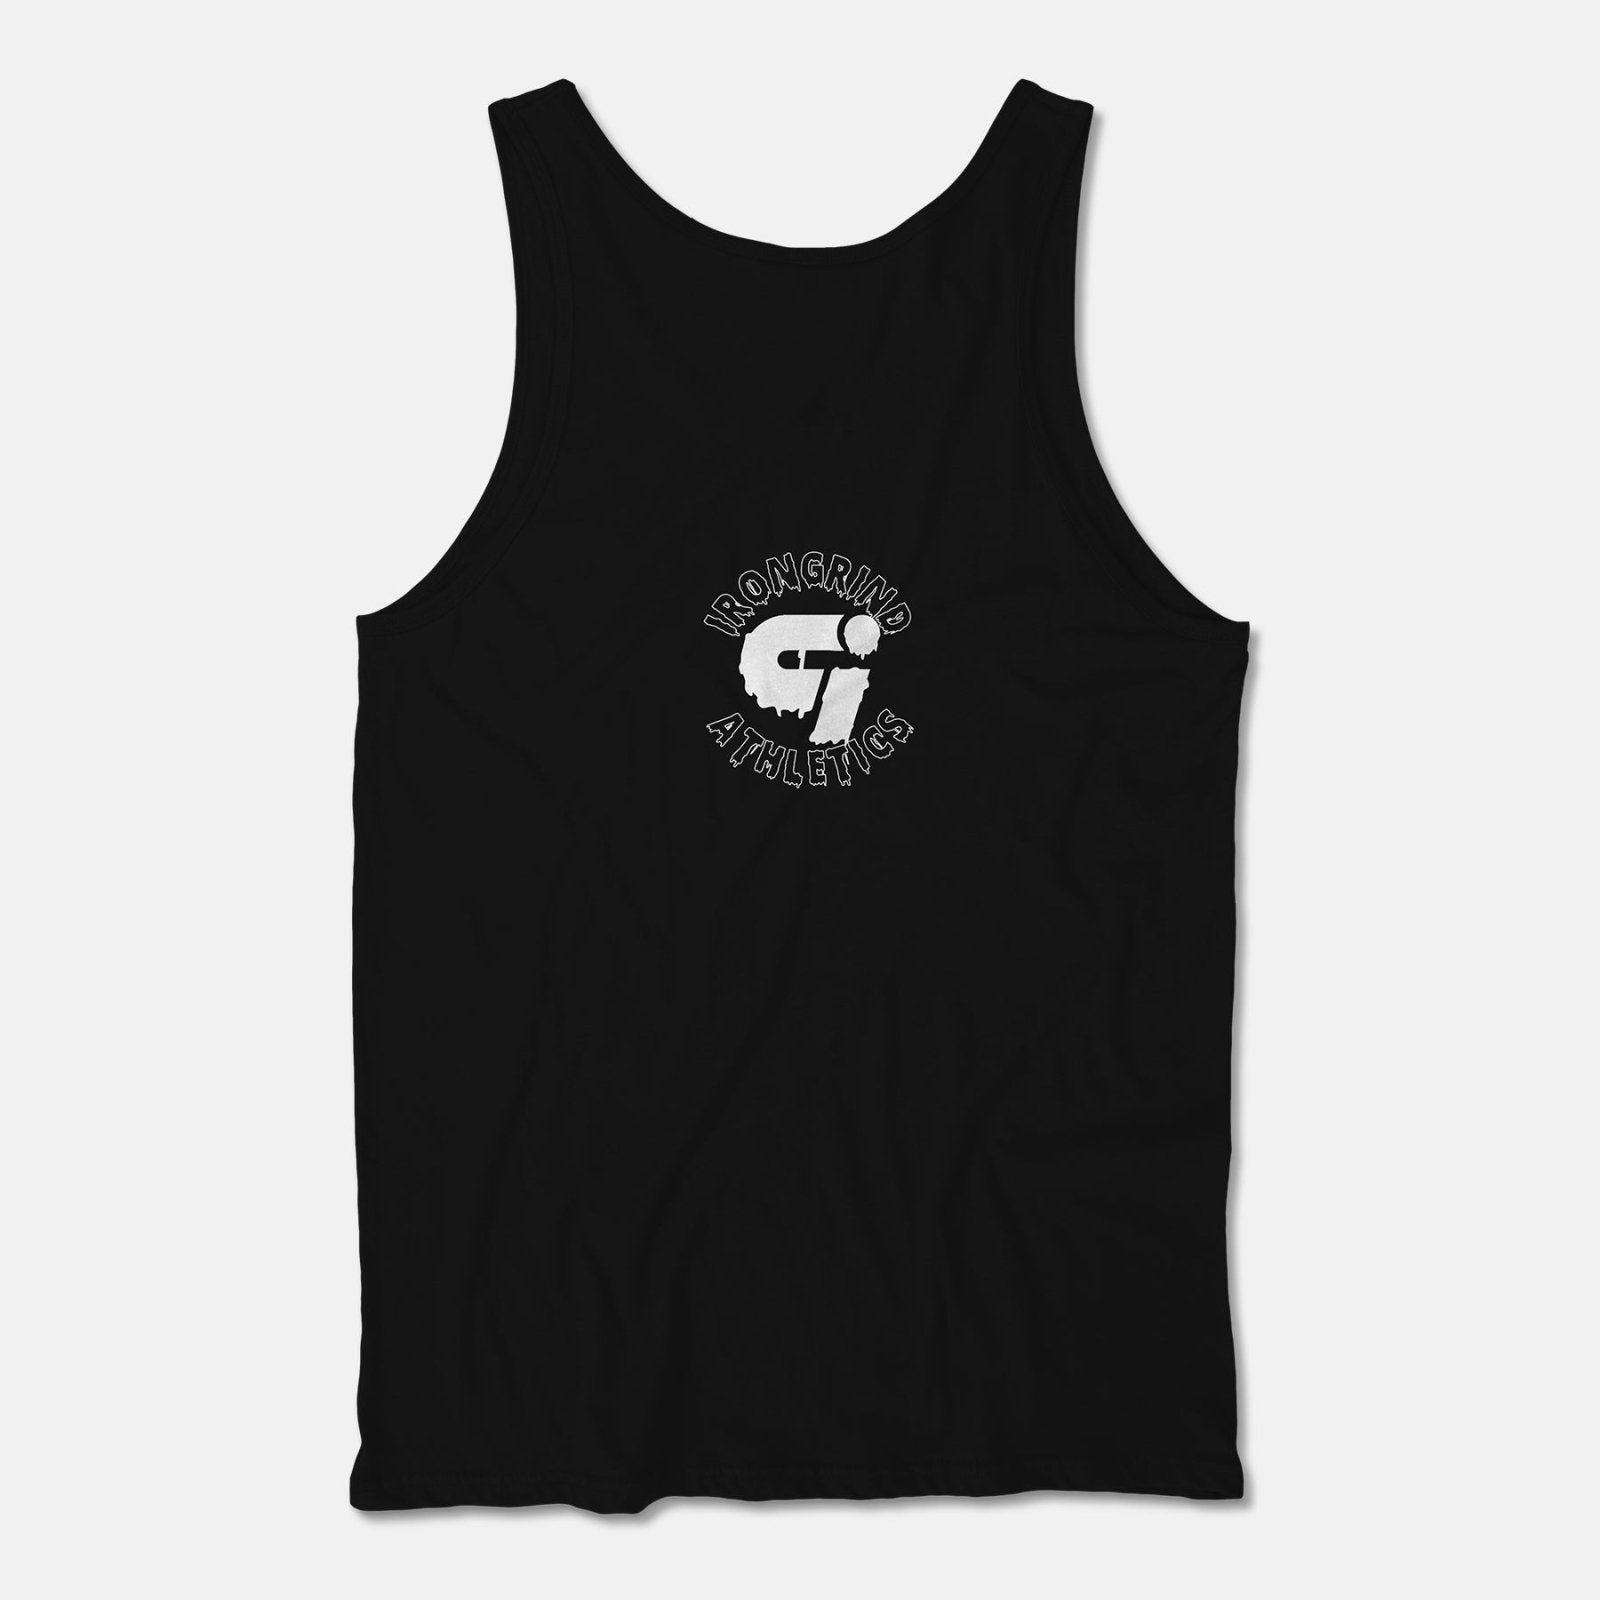 [Limited Edition] HalloStream 'Ghost' Tank Top - IronGrind Athletics - activewear - gymshark - alphalete